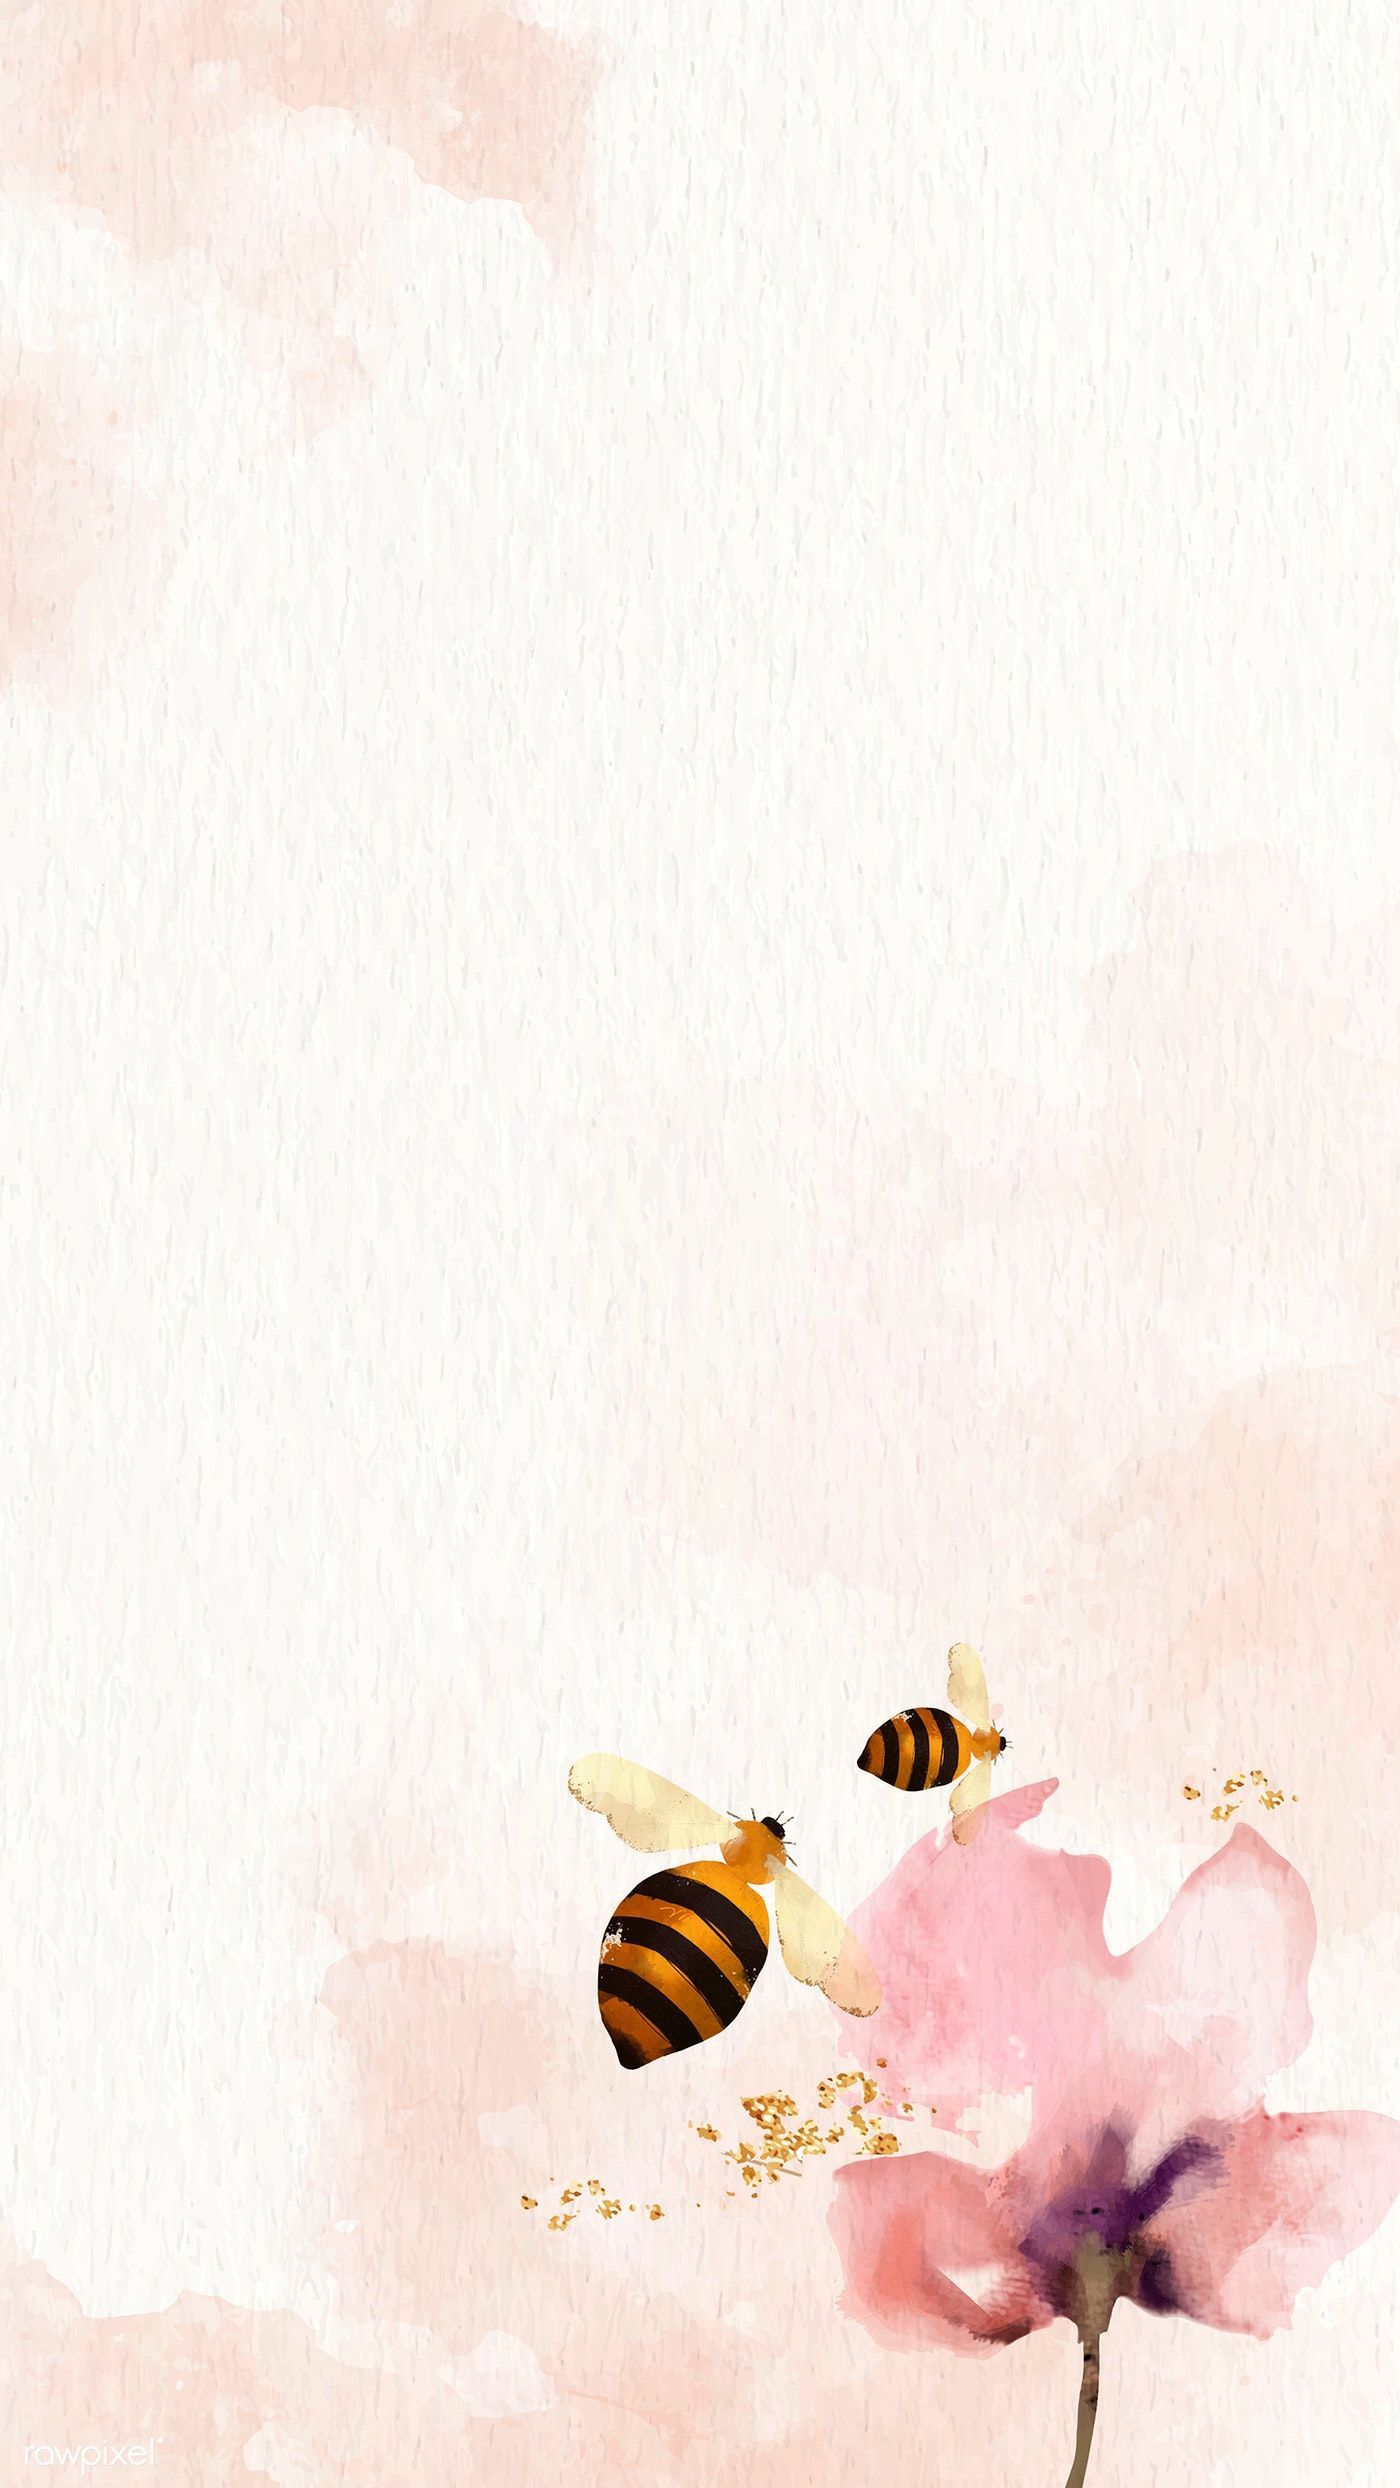 Download premium vector of Honey Bees and flower watercolor